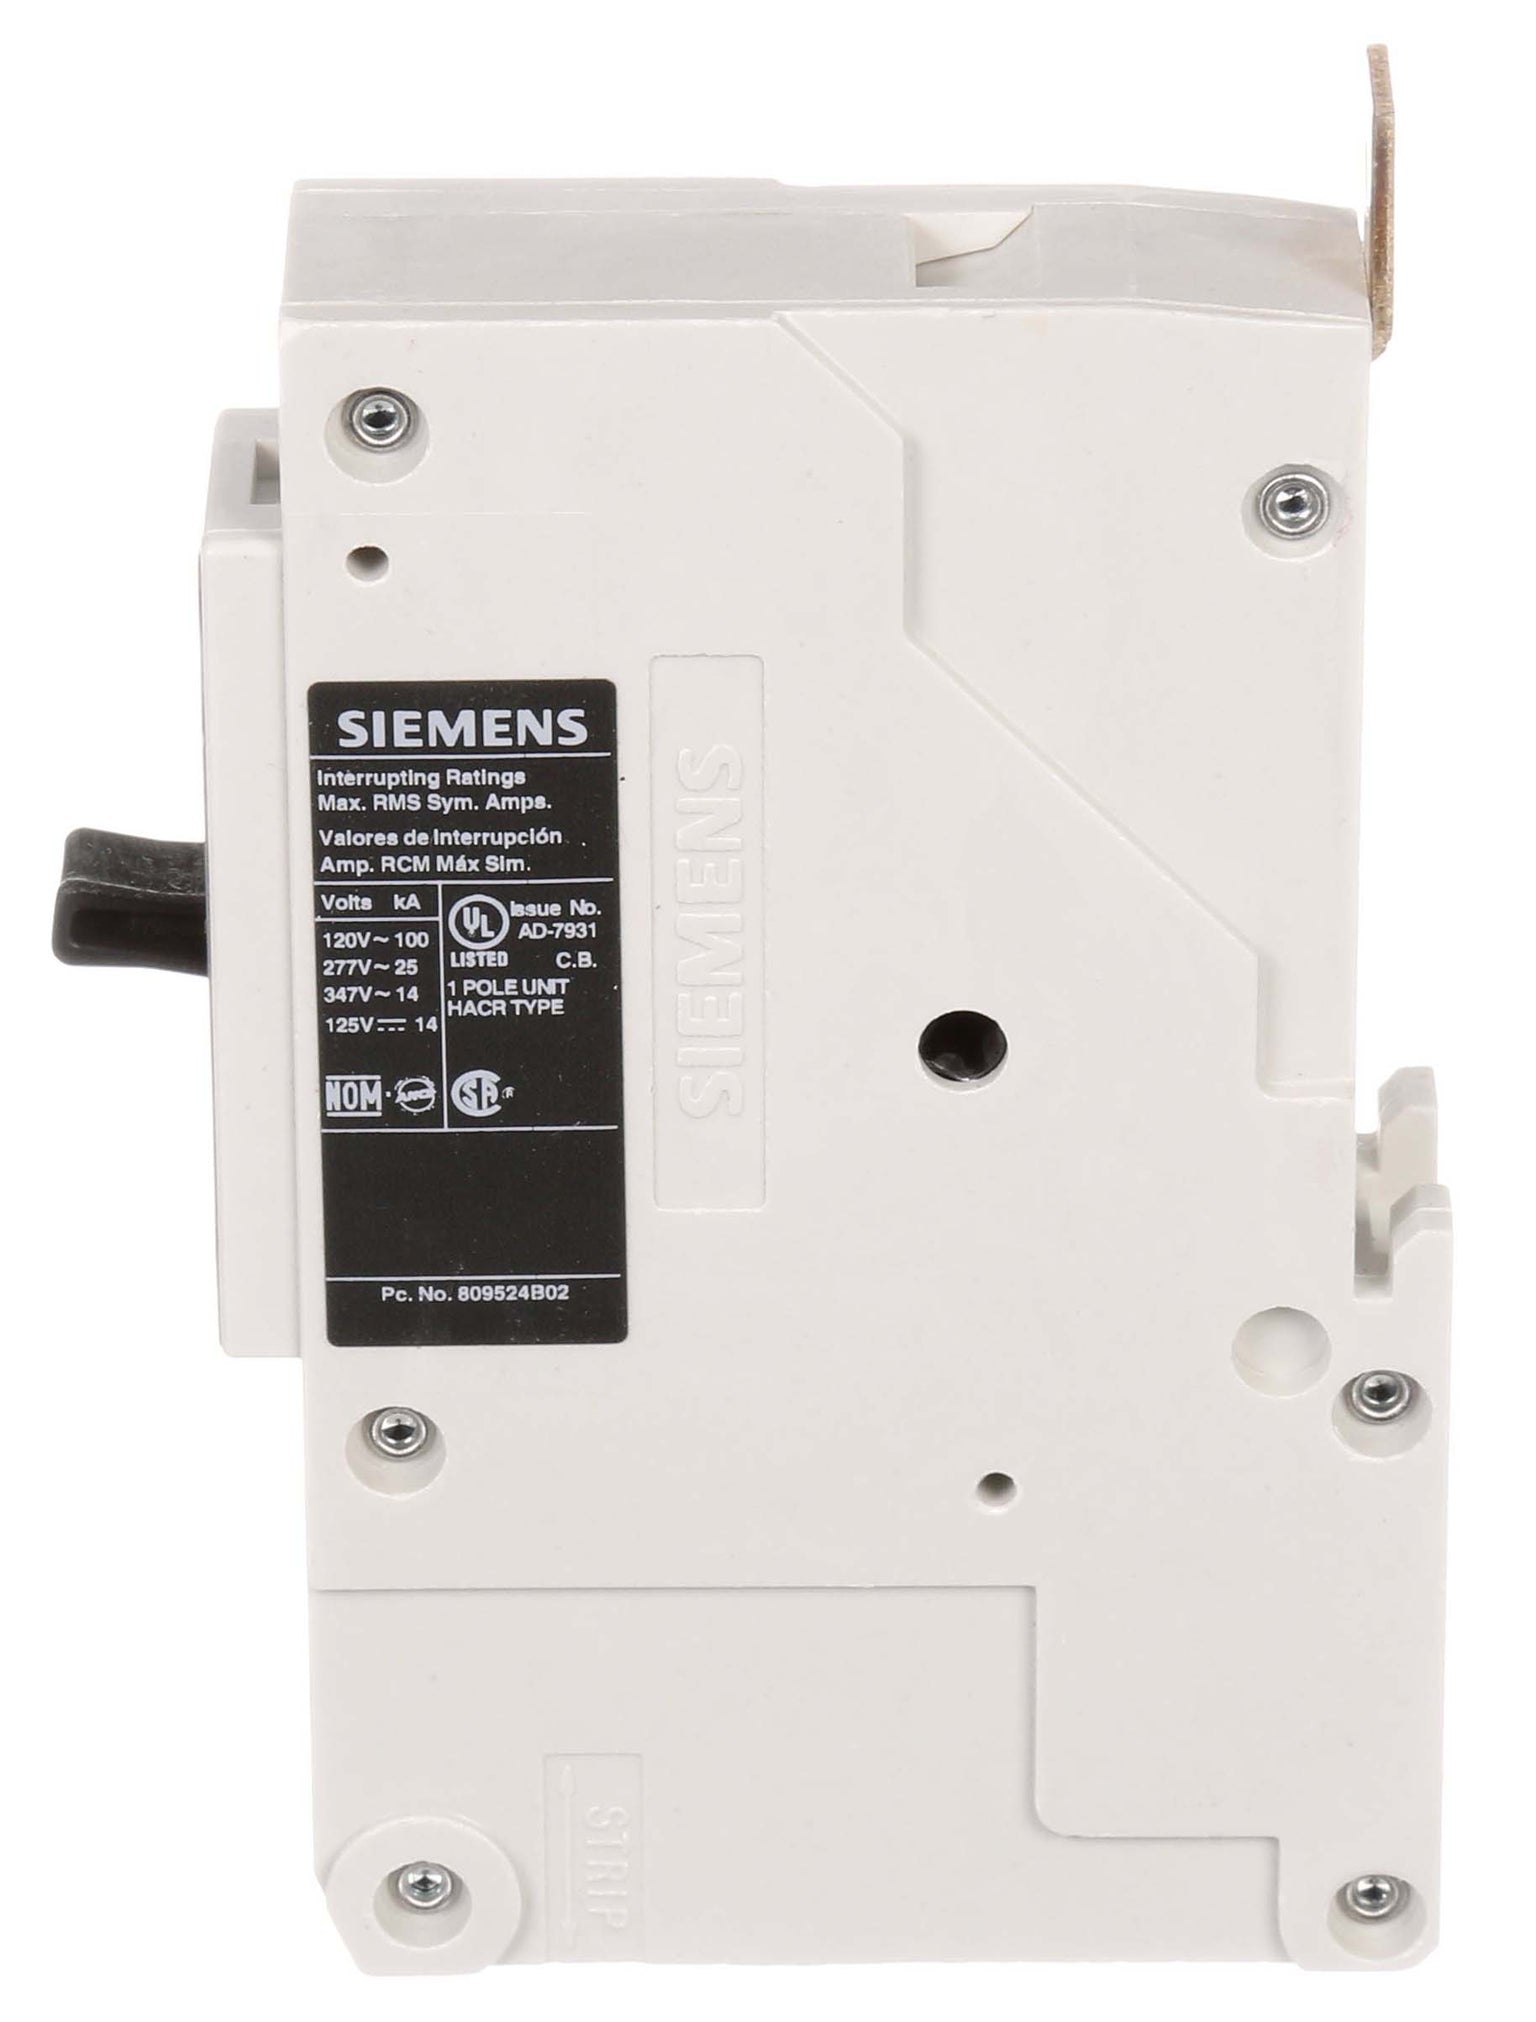 NGB1B040B - Siemens - Molded Case Circuit Breaker